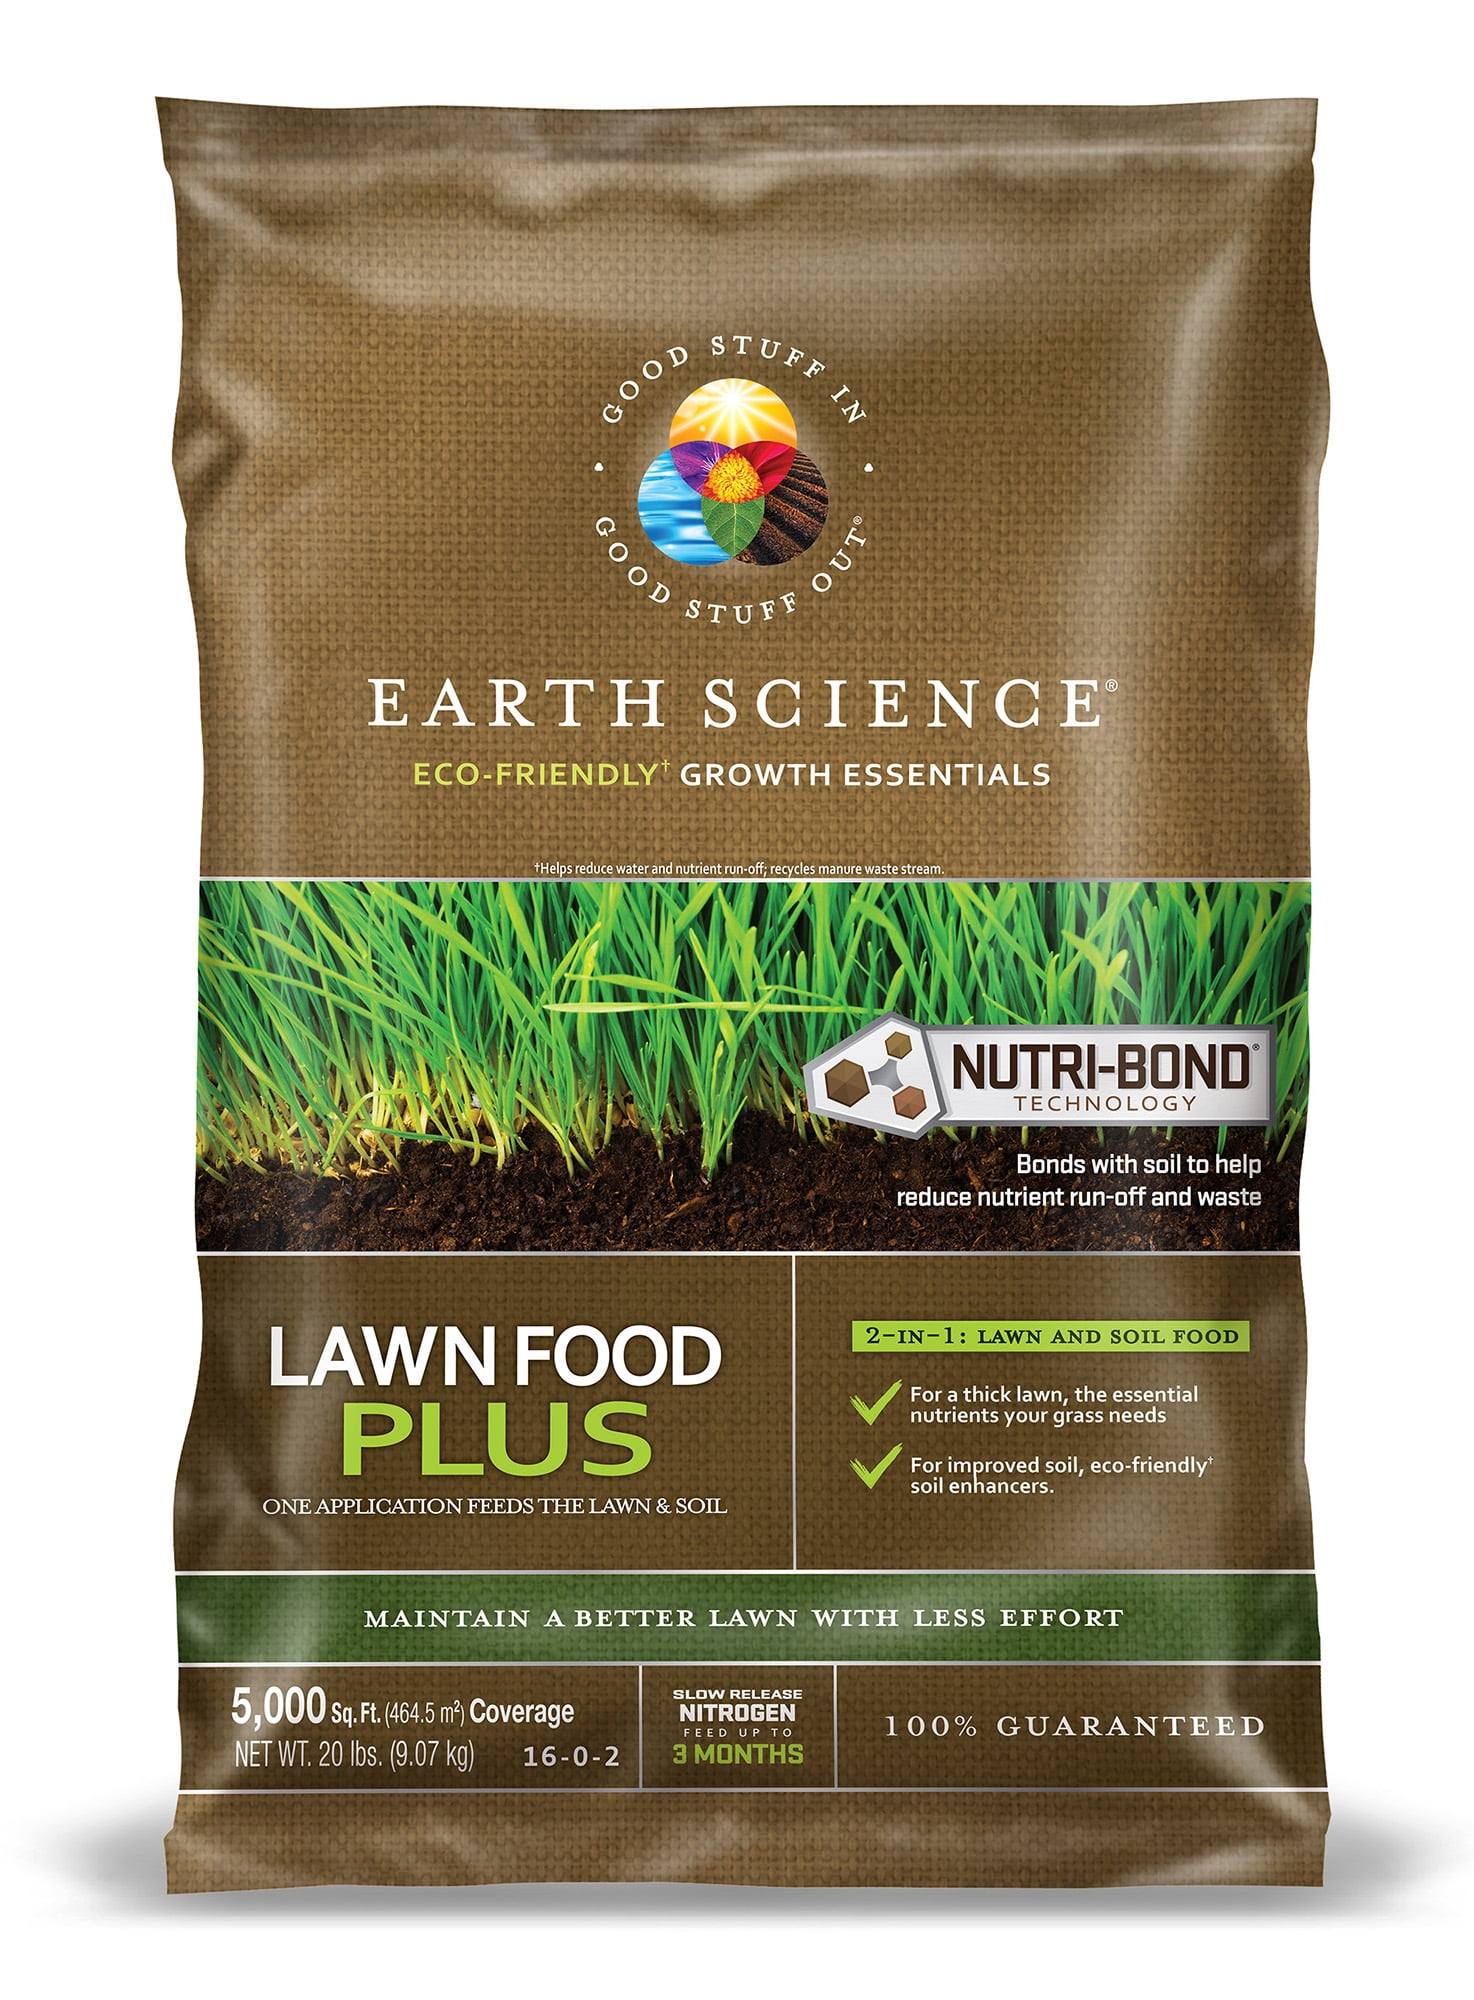 Earth Science Lawn Food Plus Natural Lawn Fertilizer 20 lb, 5,000 sq.ft. Coverage